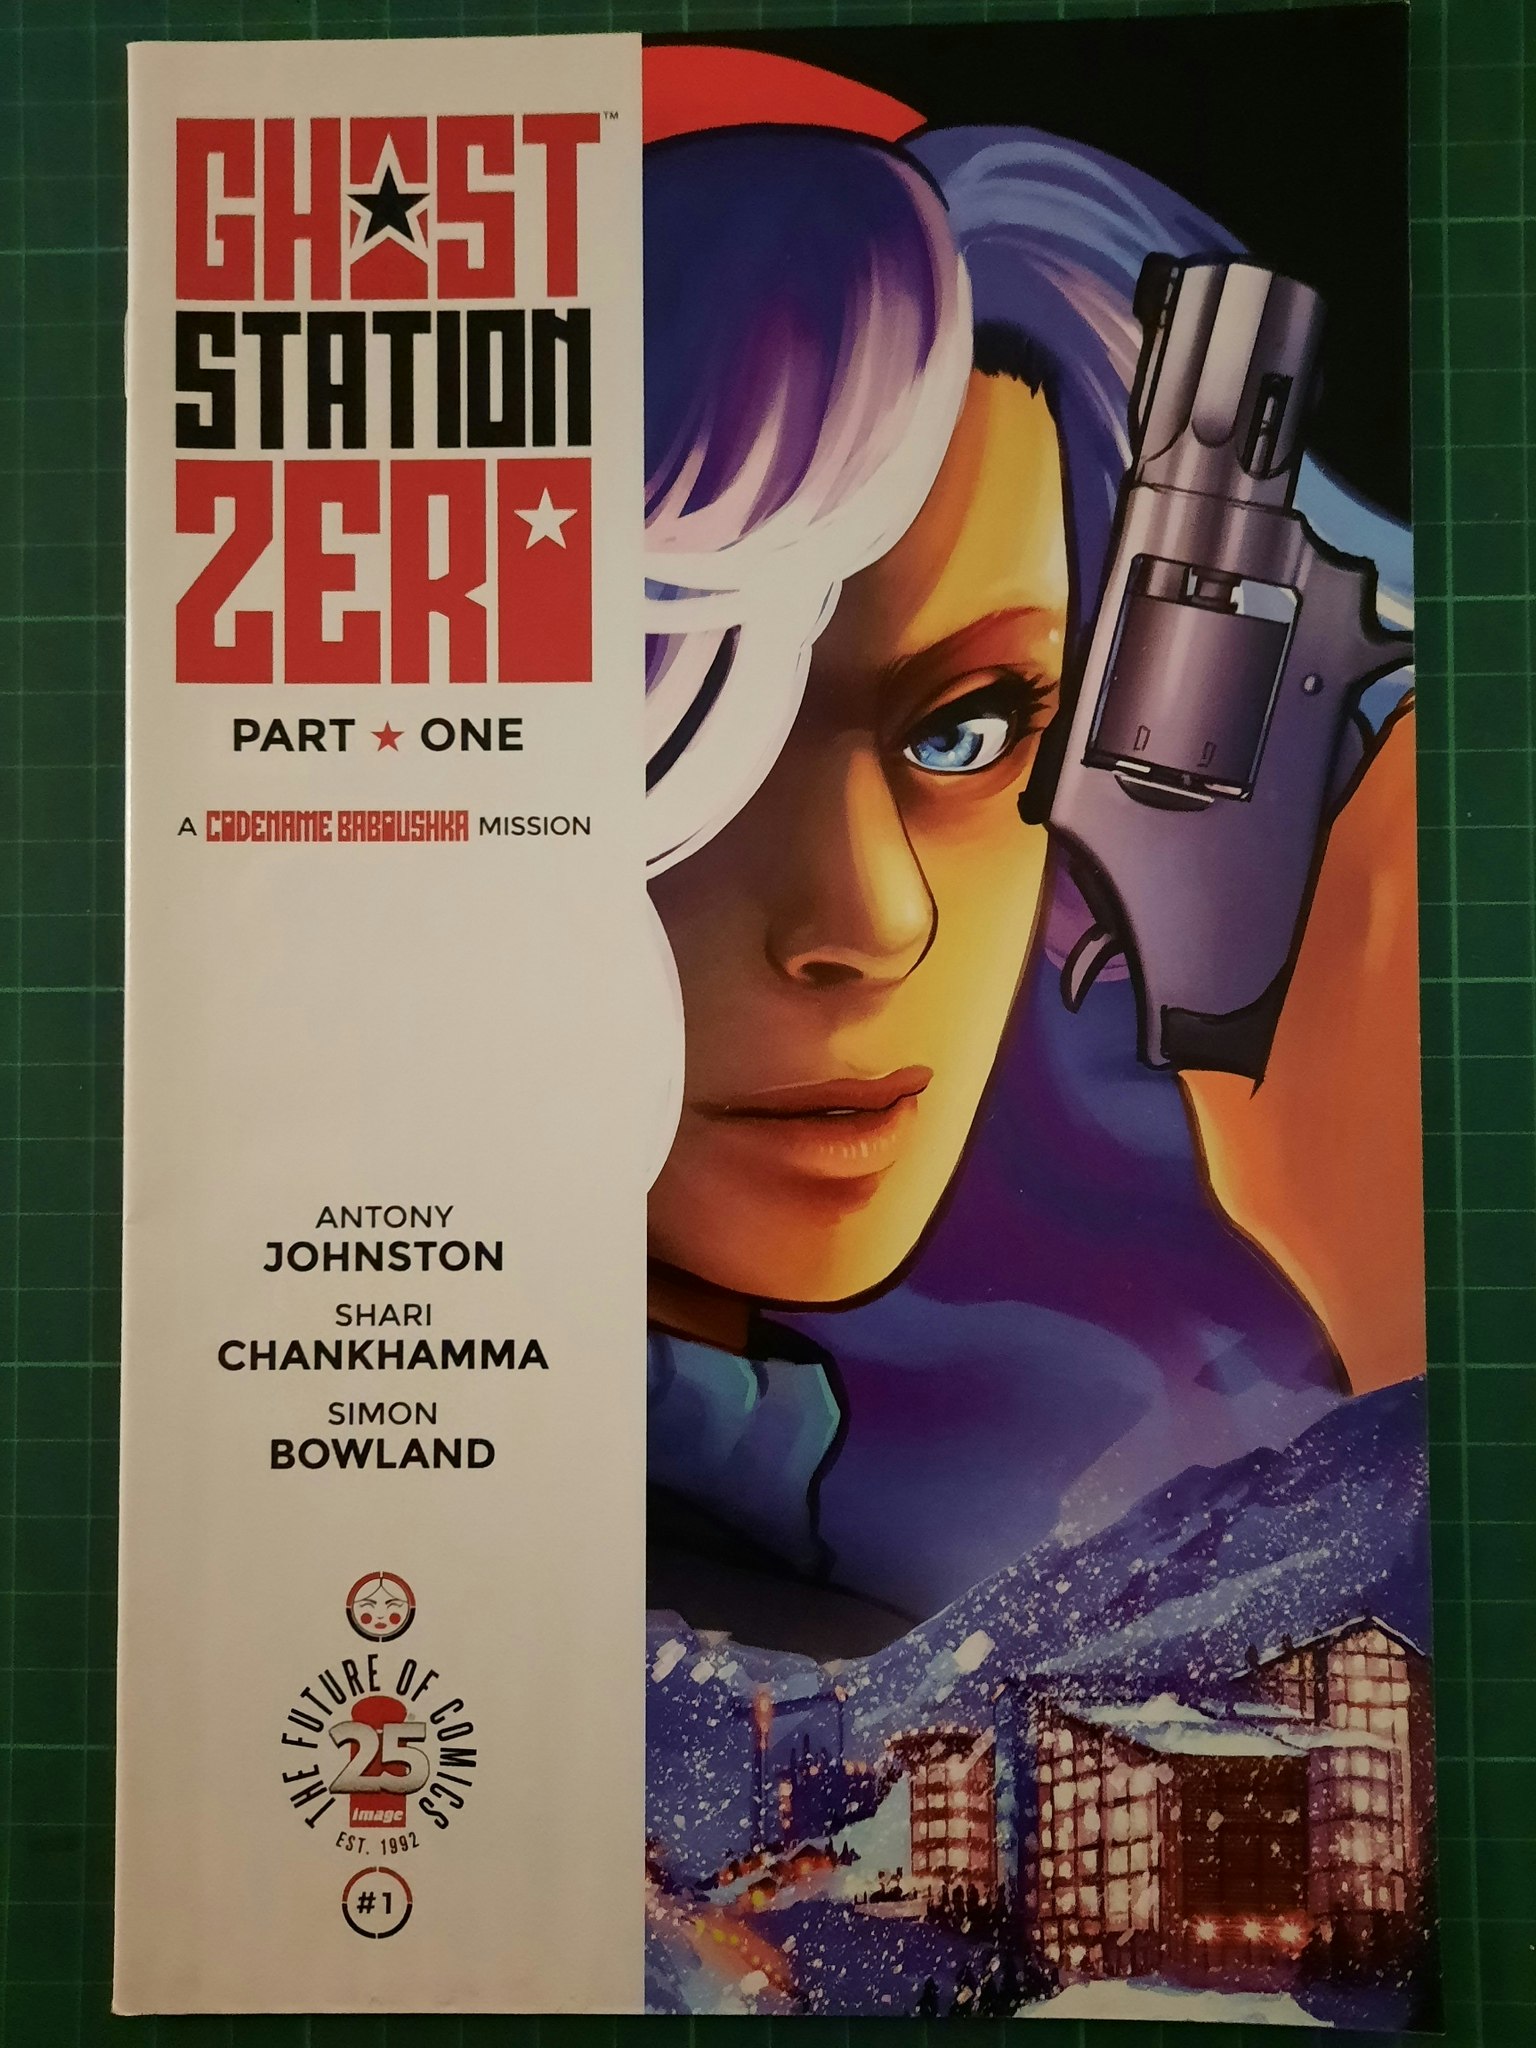 Ghost station zero #01